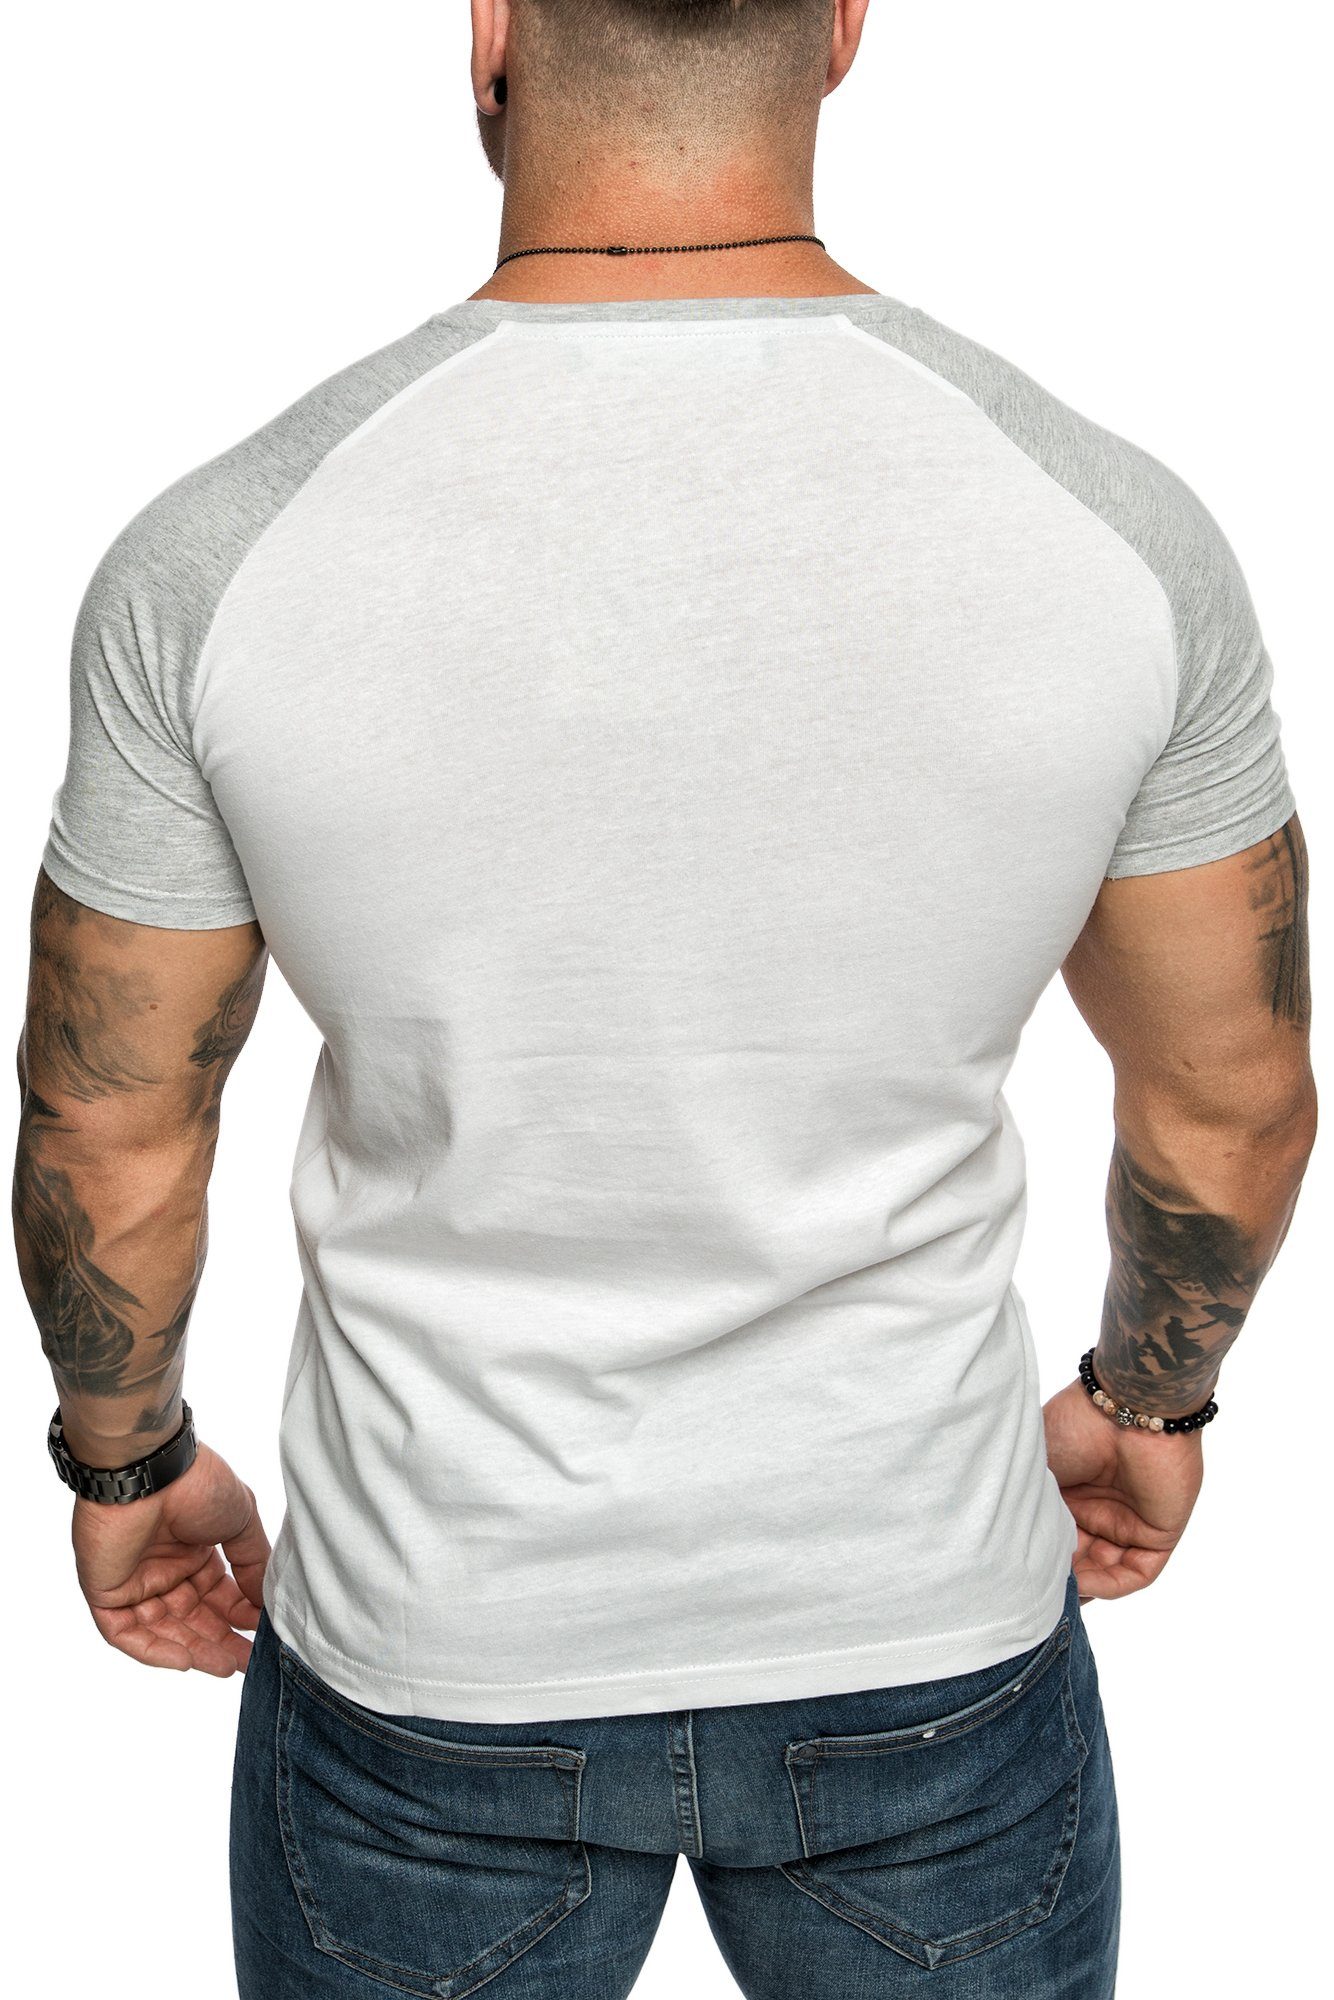 Amaci&Sons mit SALEM T-Shirt Raglan Shirt Weiß/Grau Rundhalsausschnitt T-Shirt Basic Raglan Herren mit Basic Rundhalsausschnitt